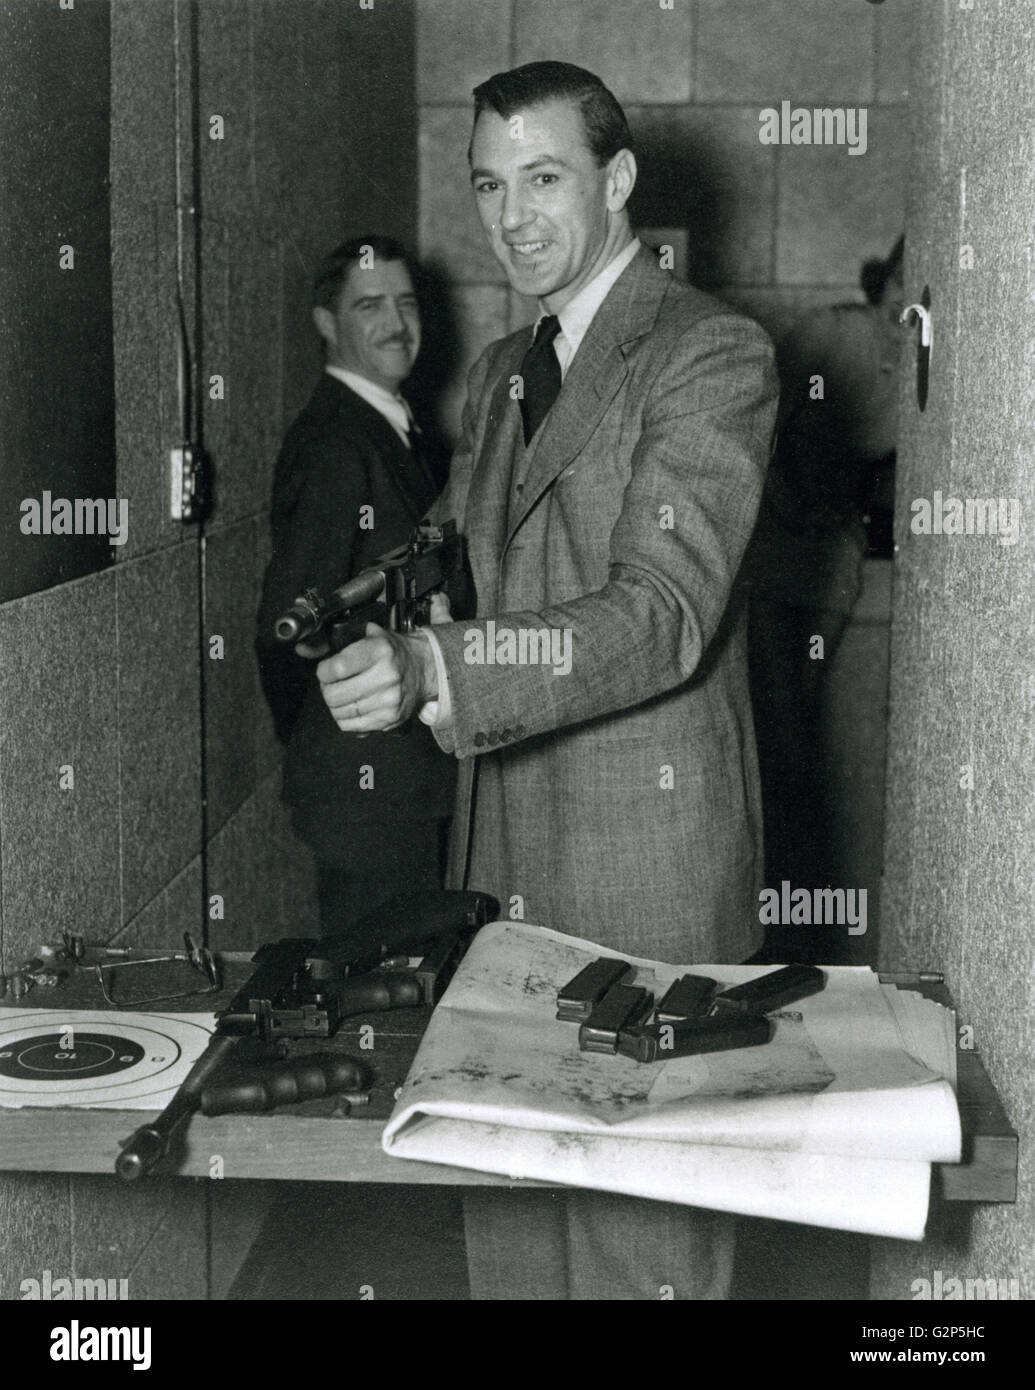 Actor Gary Cooper with a Thompson submachine gun on the FBI firing range. Stock Photo